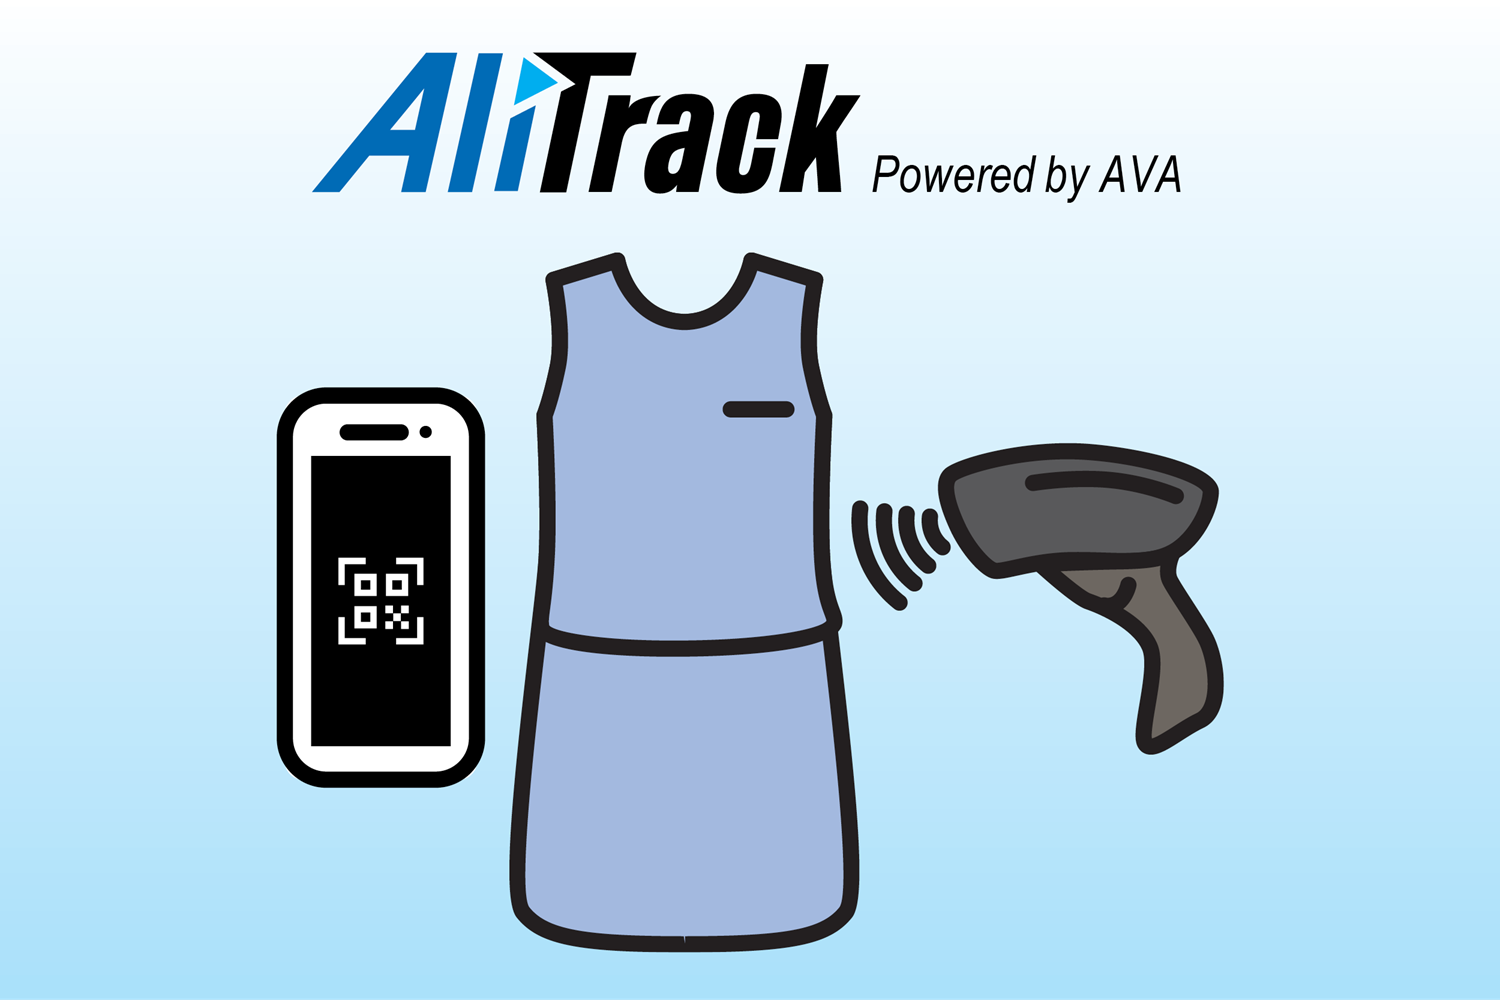 AliTrack Digital Tracking System